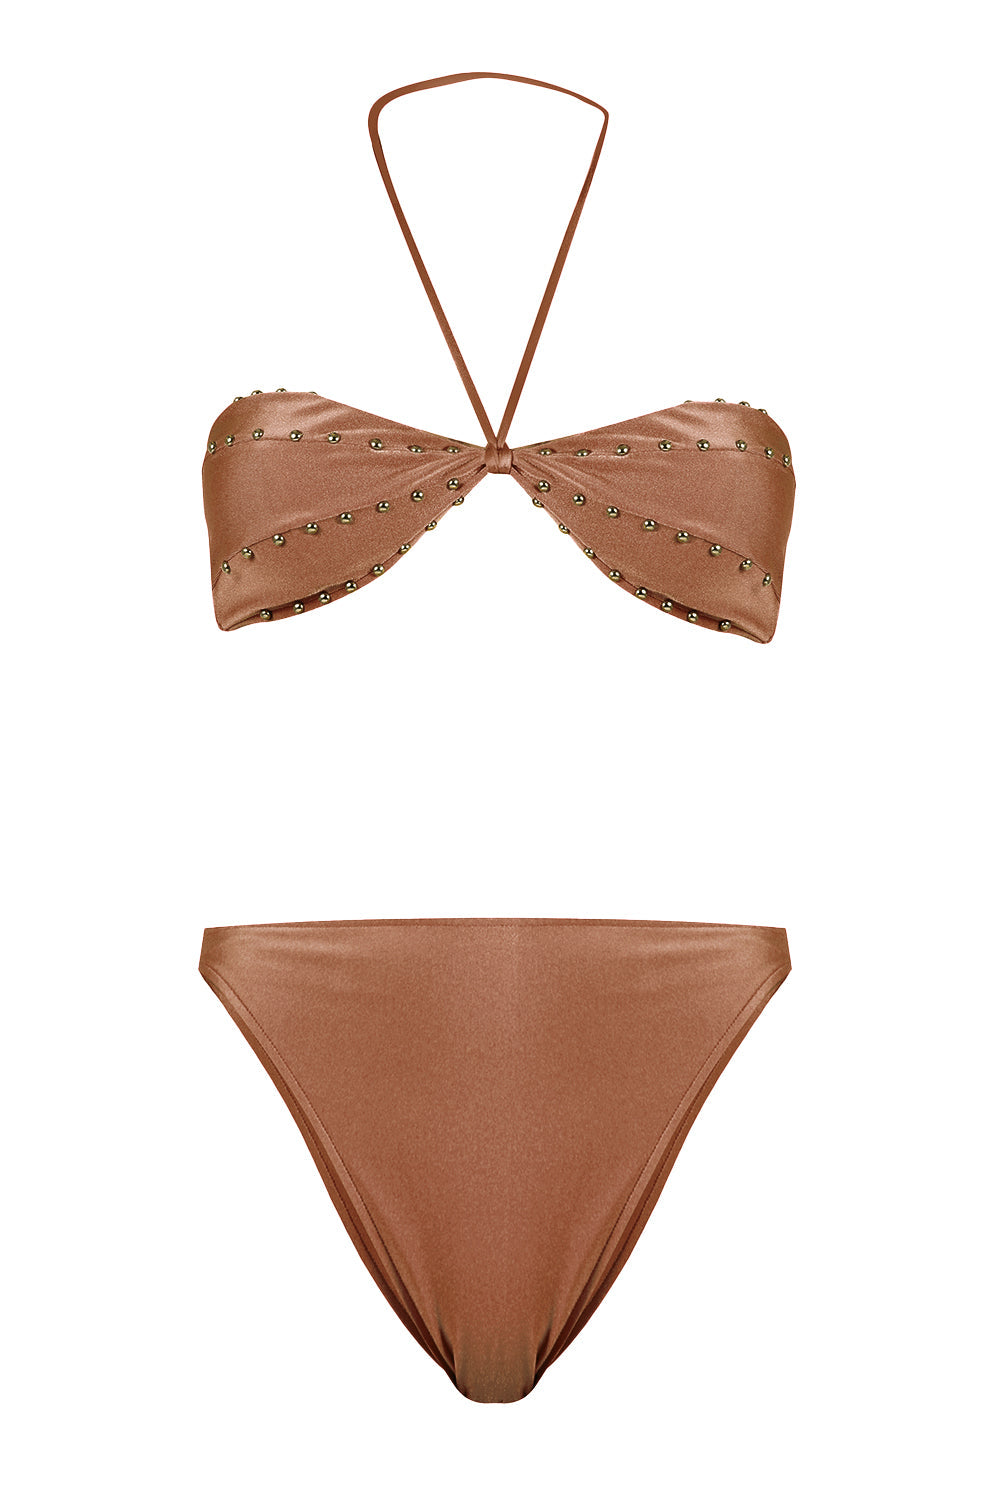 Solid Carre Vintage Brown High-leg Halterneck Bikini Product